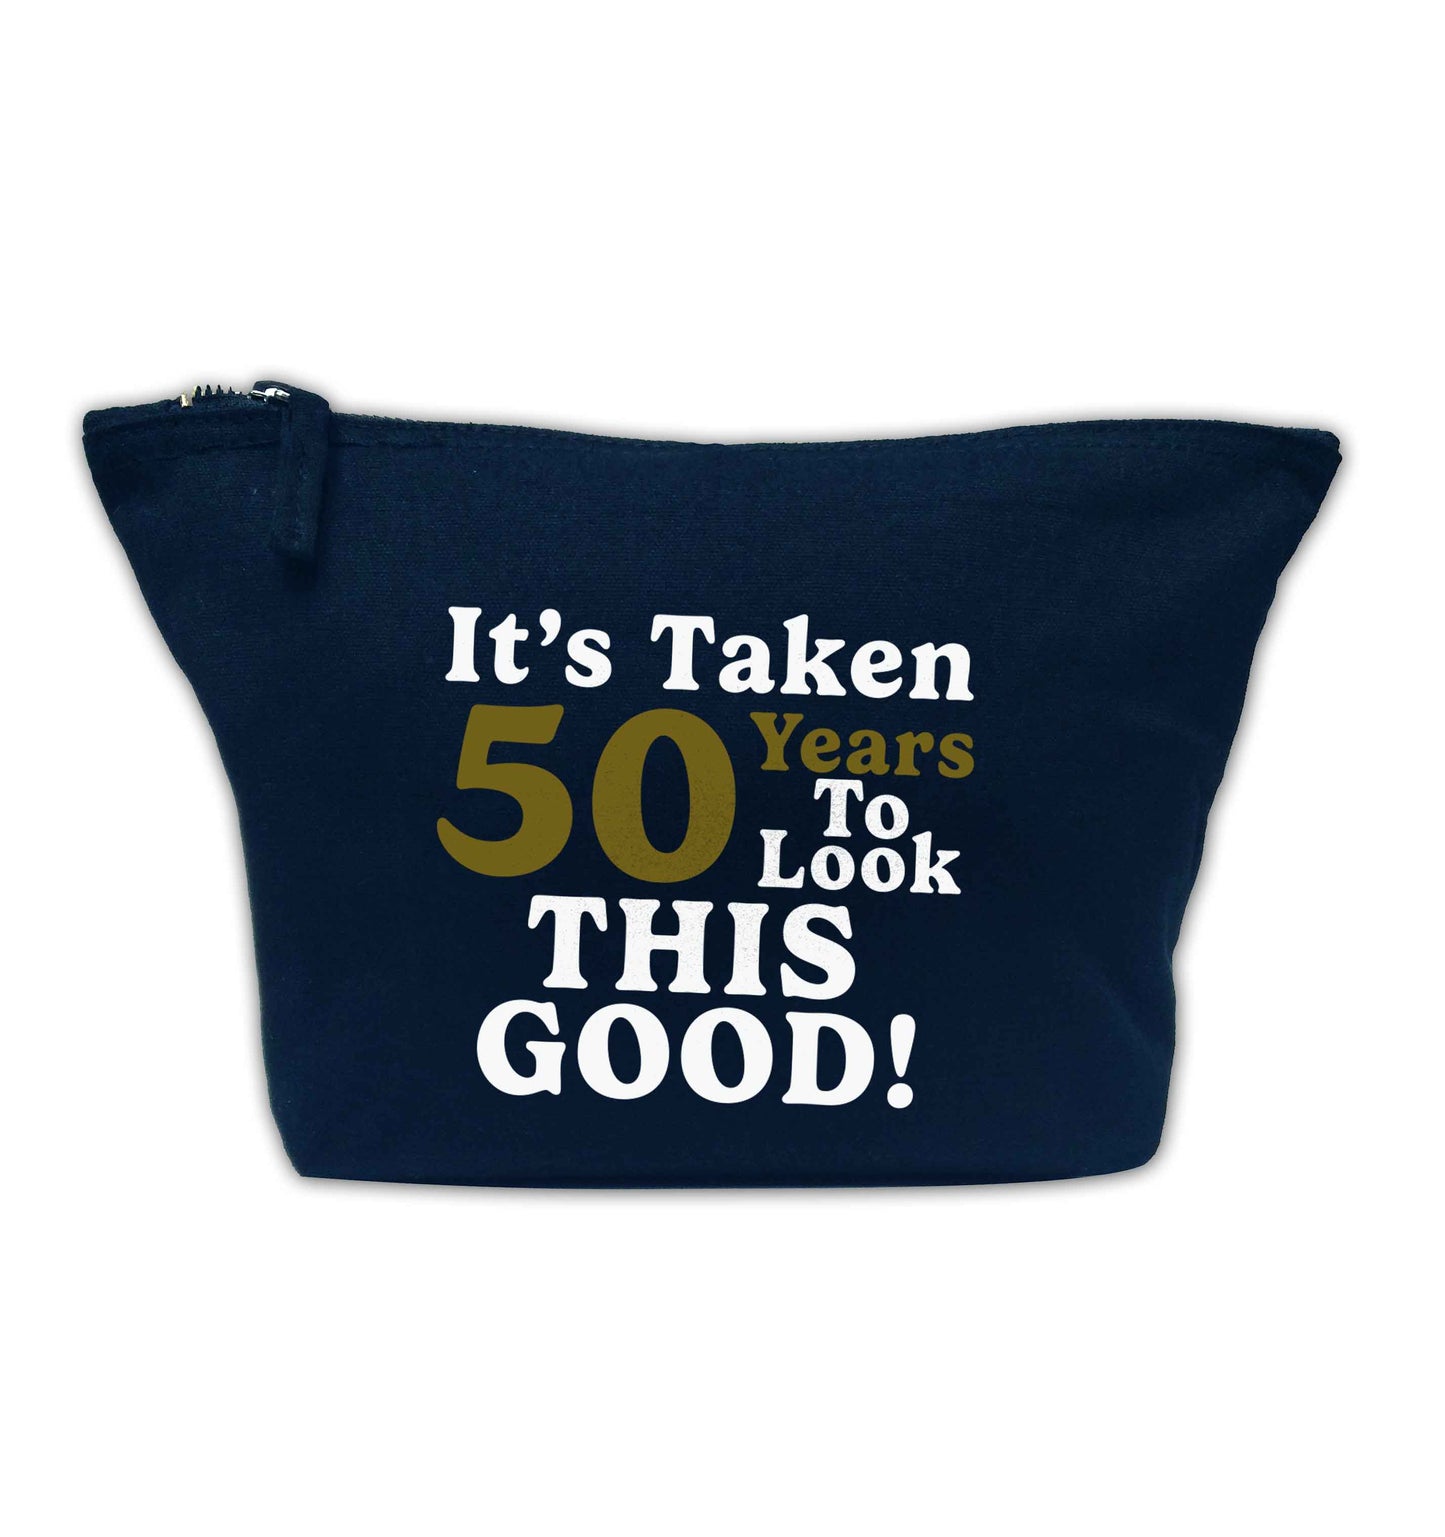 It's taken 50 years to look this good! navy makeup bag